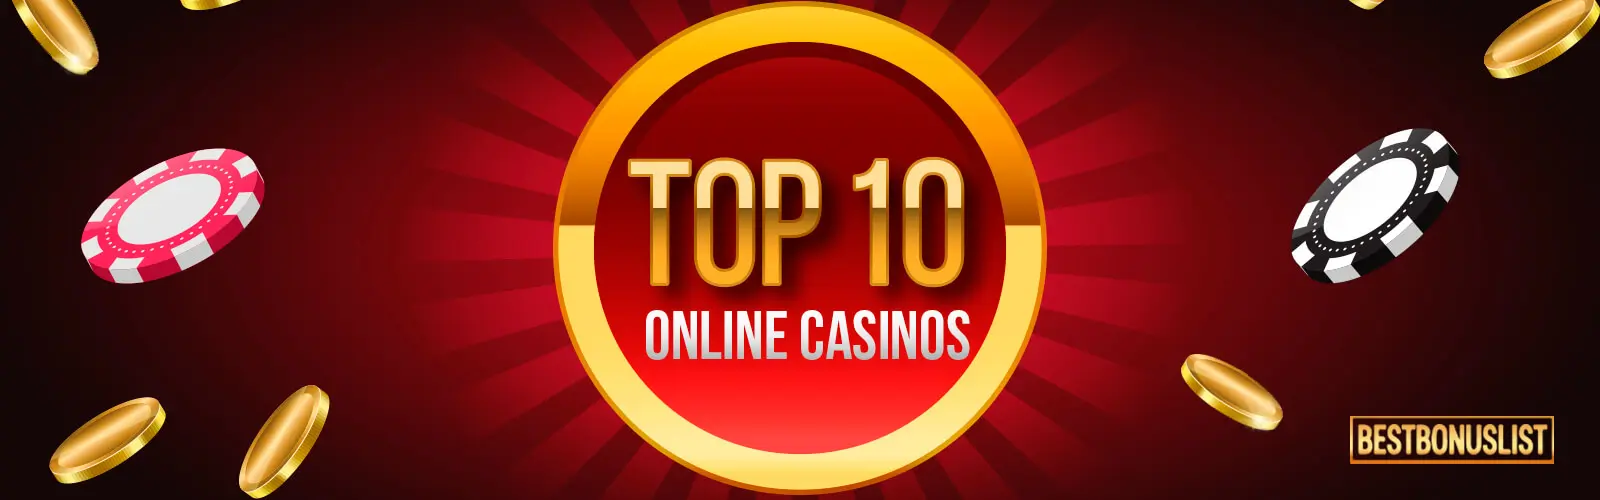 top 10 best online casinos for canada by bestbonuslist.com